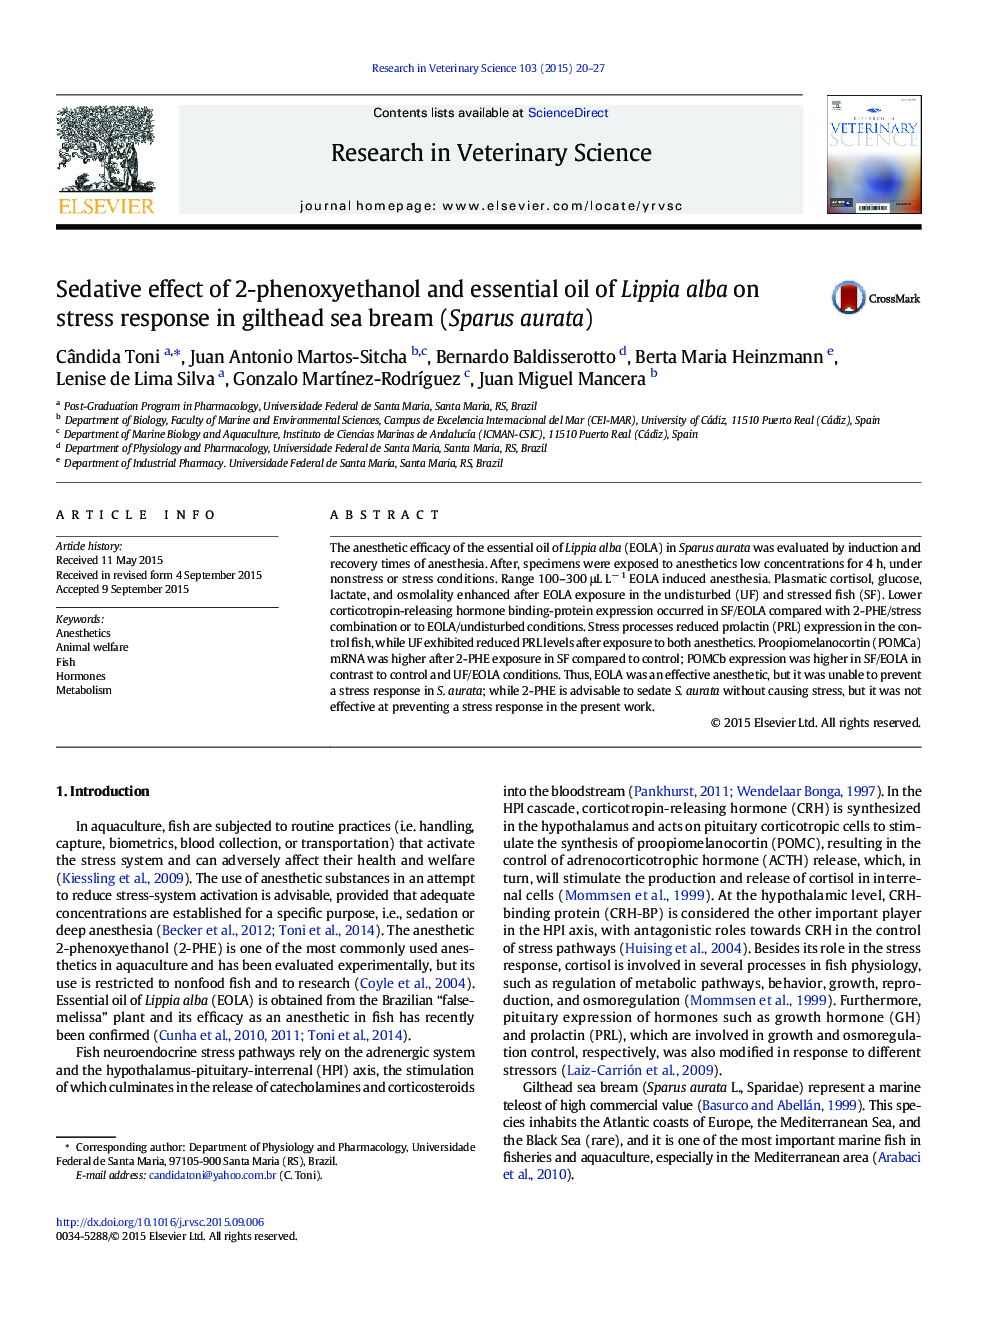 Sedative effect of 2-phenoxyethanol and essential oil of Lippia alba on stress response in gilthead sea bream (Sparus aurata)